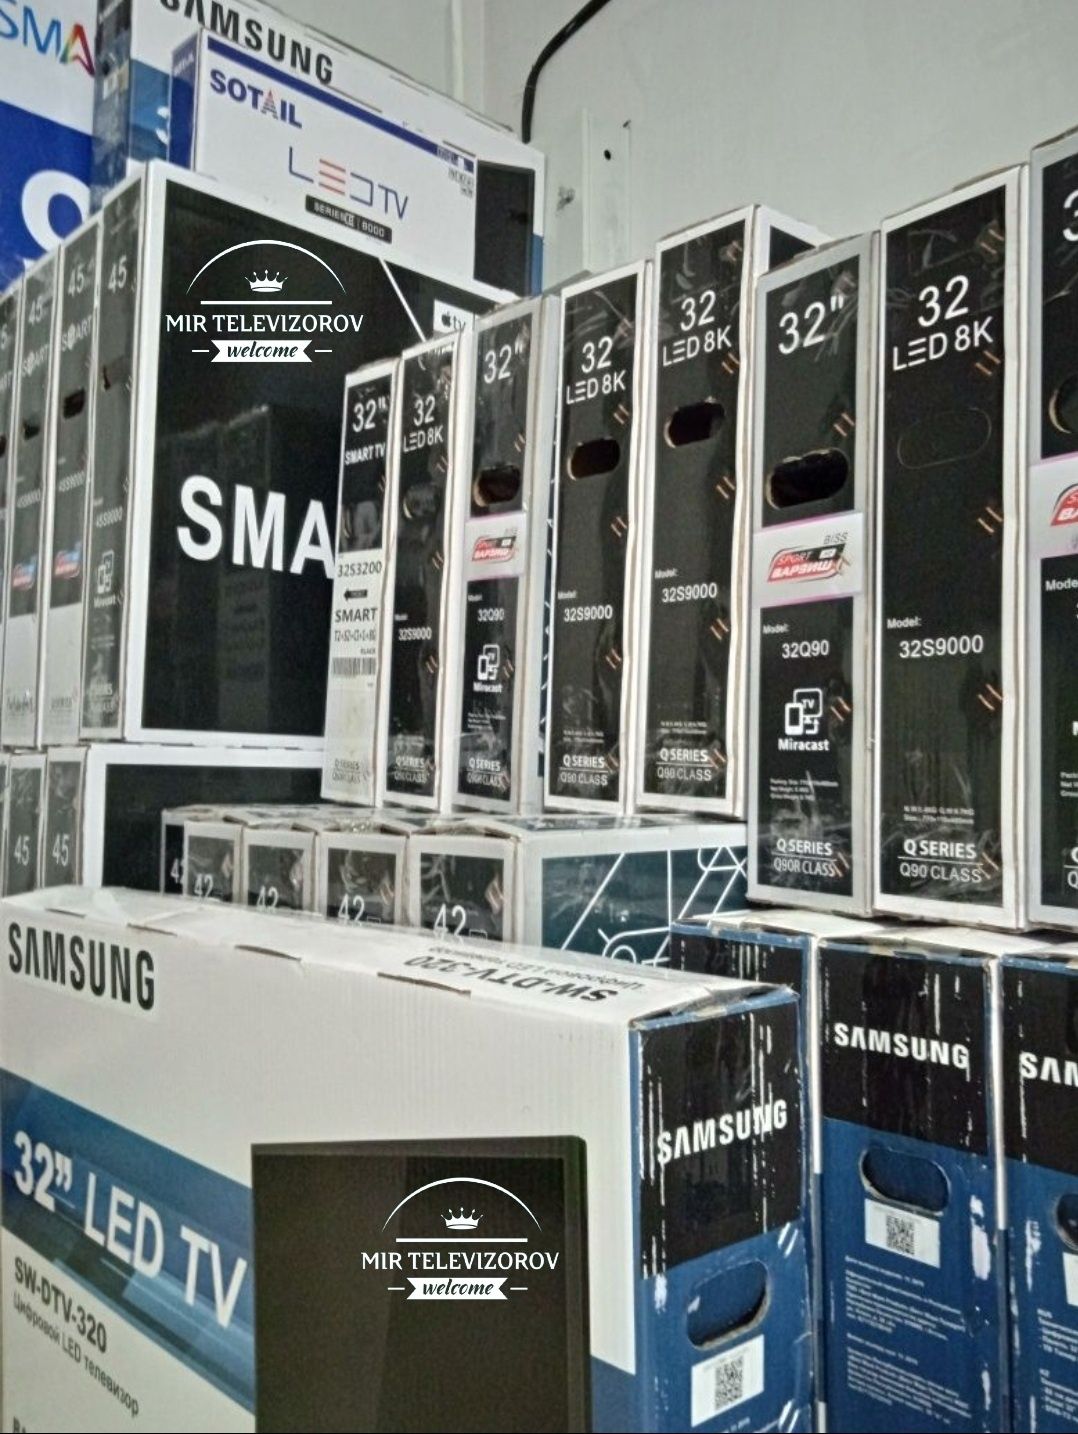 Телевизор Samsung smart 32дюйма / Новый телевизор Самсунг Смарт 82 см.